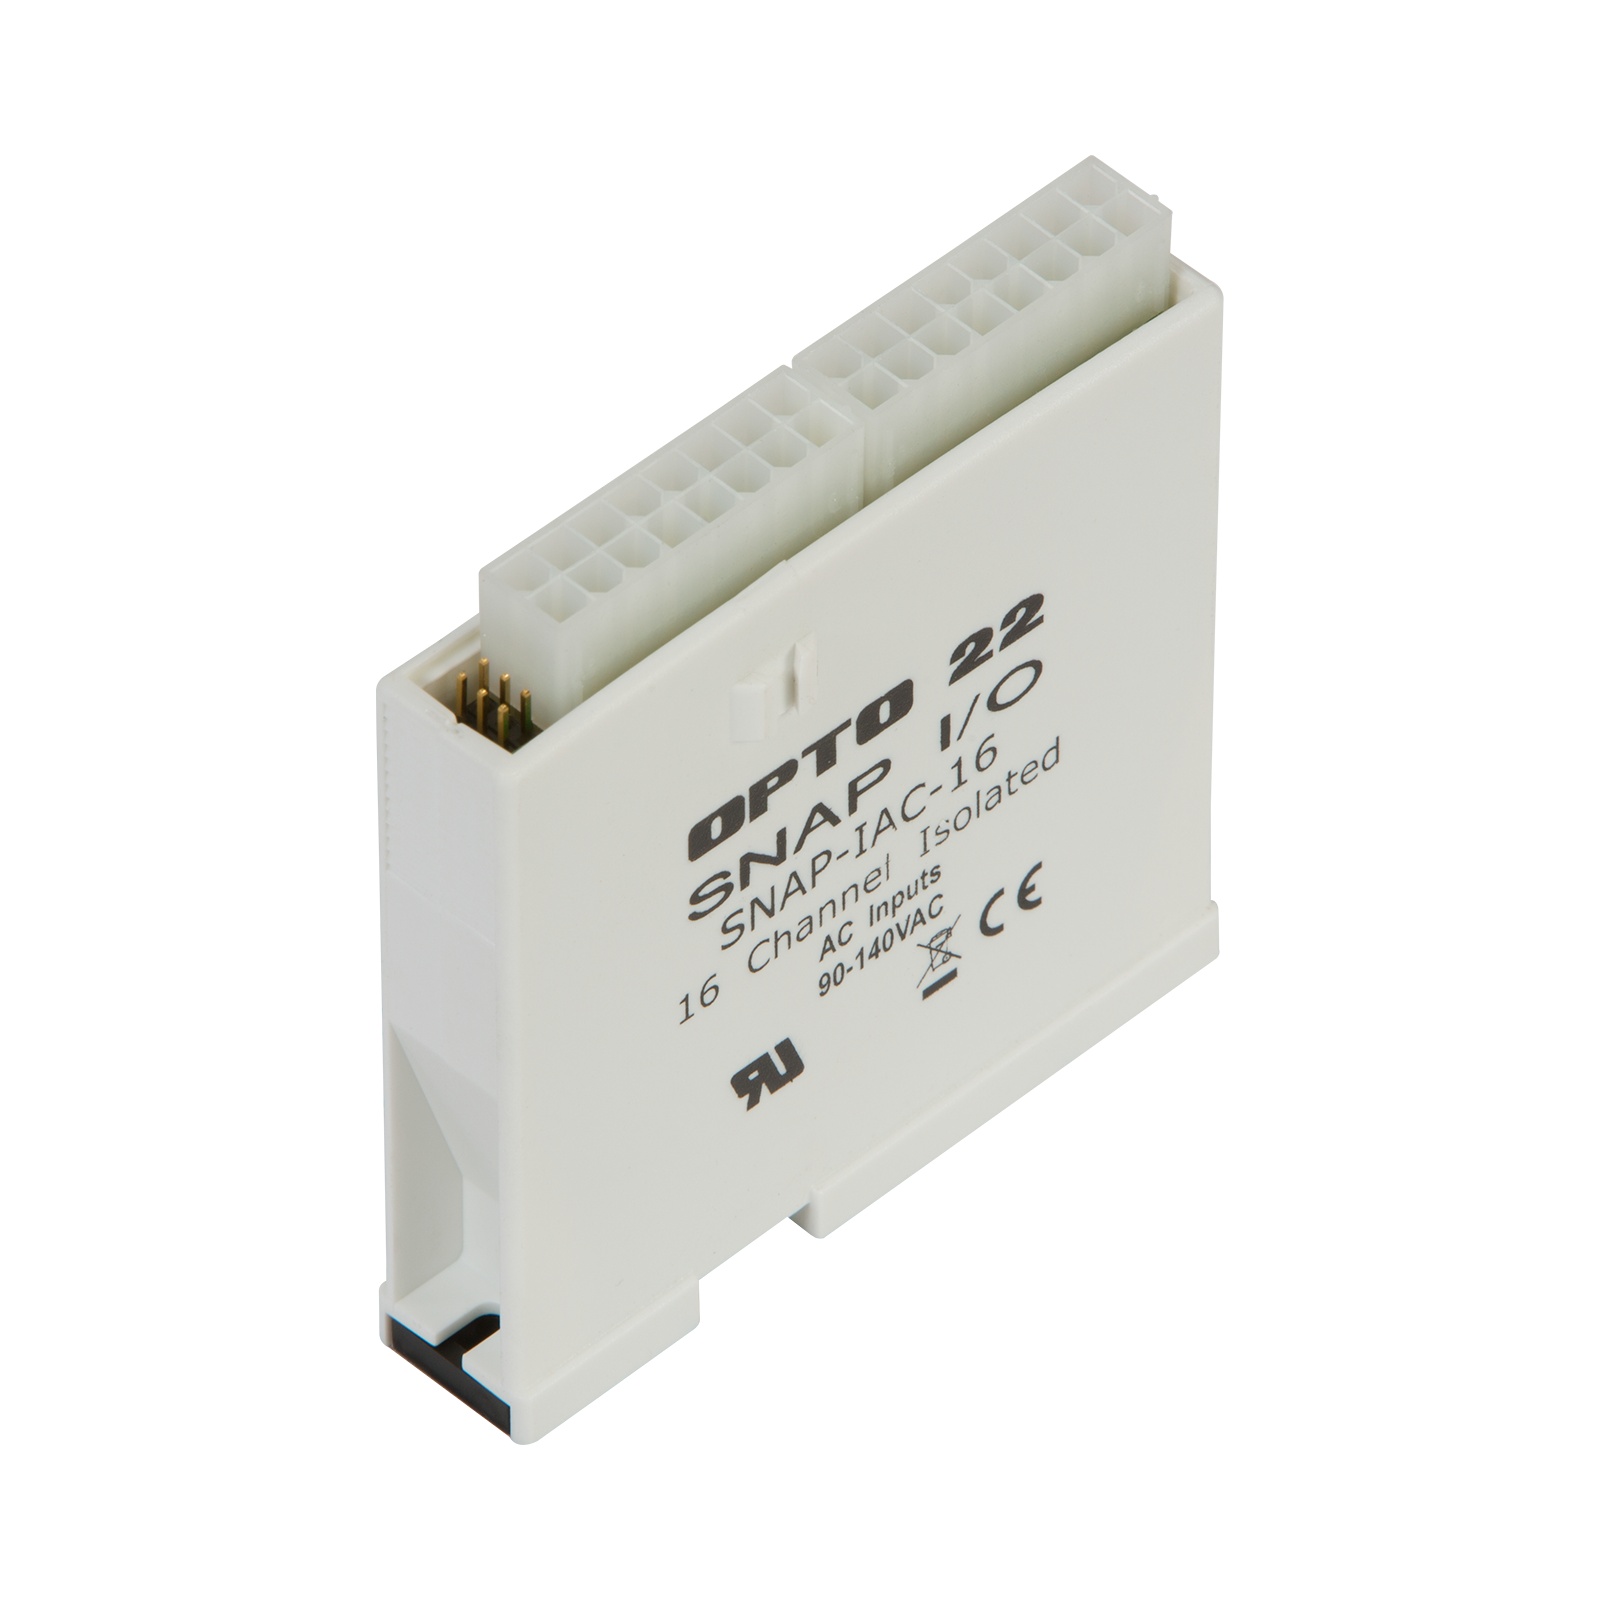 OPTO 22 - SNAP-PS5U SNAP Power Supply 100-250 VAC to 5 VDC - Instru-measure